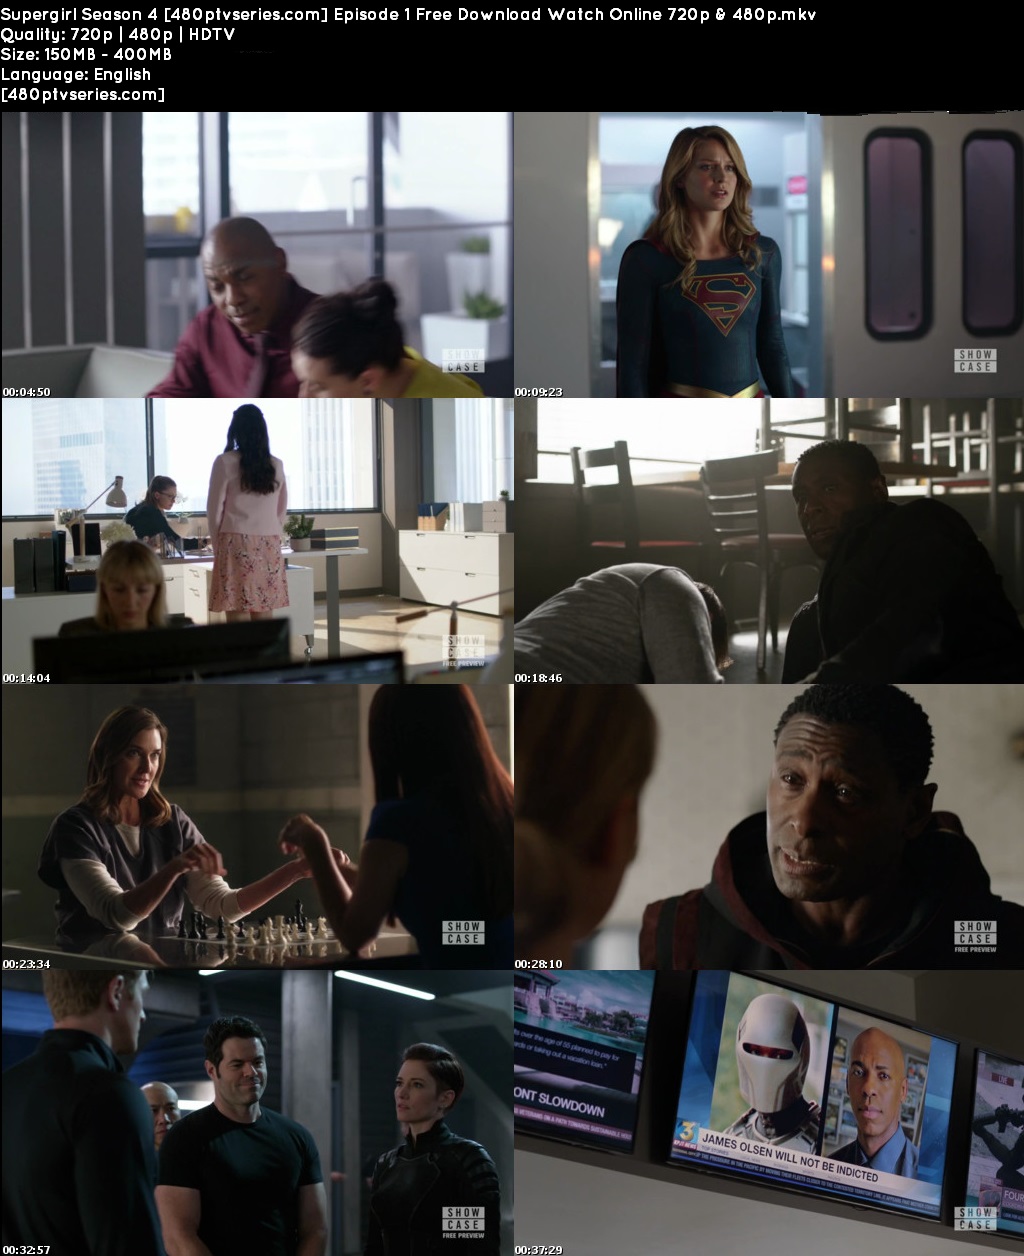 Supergirl Season 4 Episode 1 Free Download Watch Online 720p & 480p